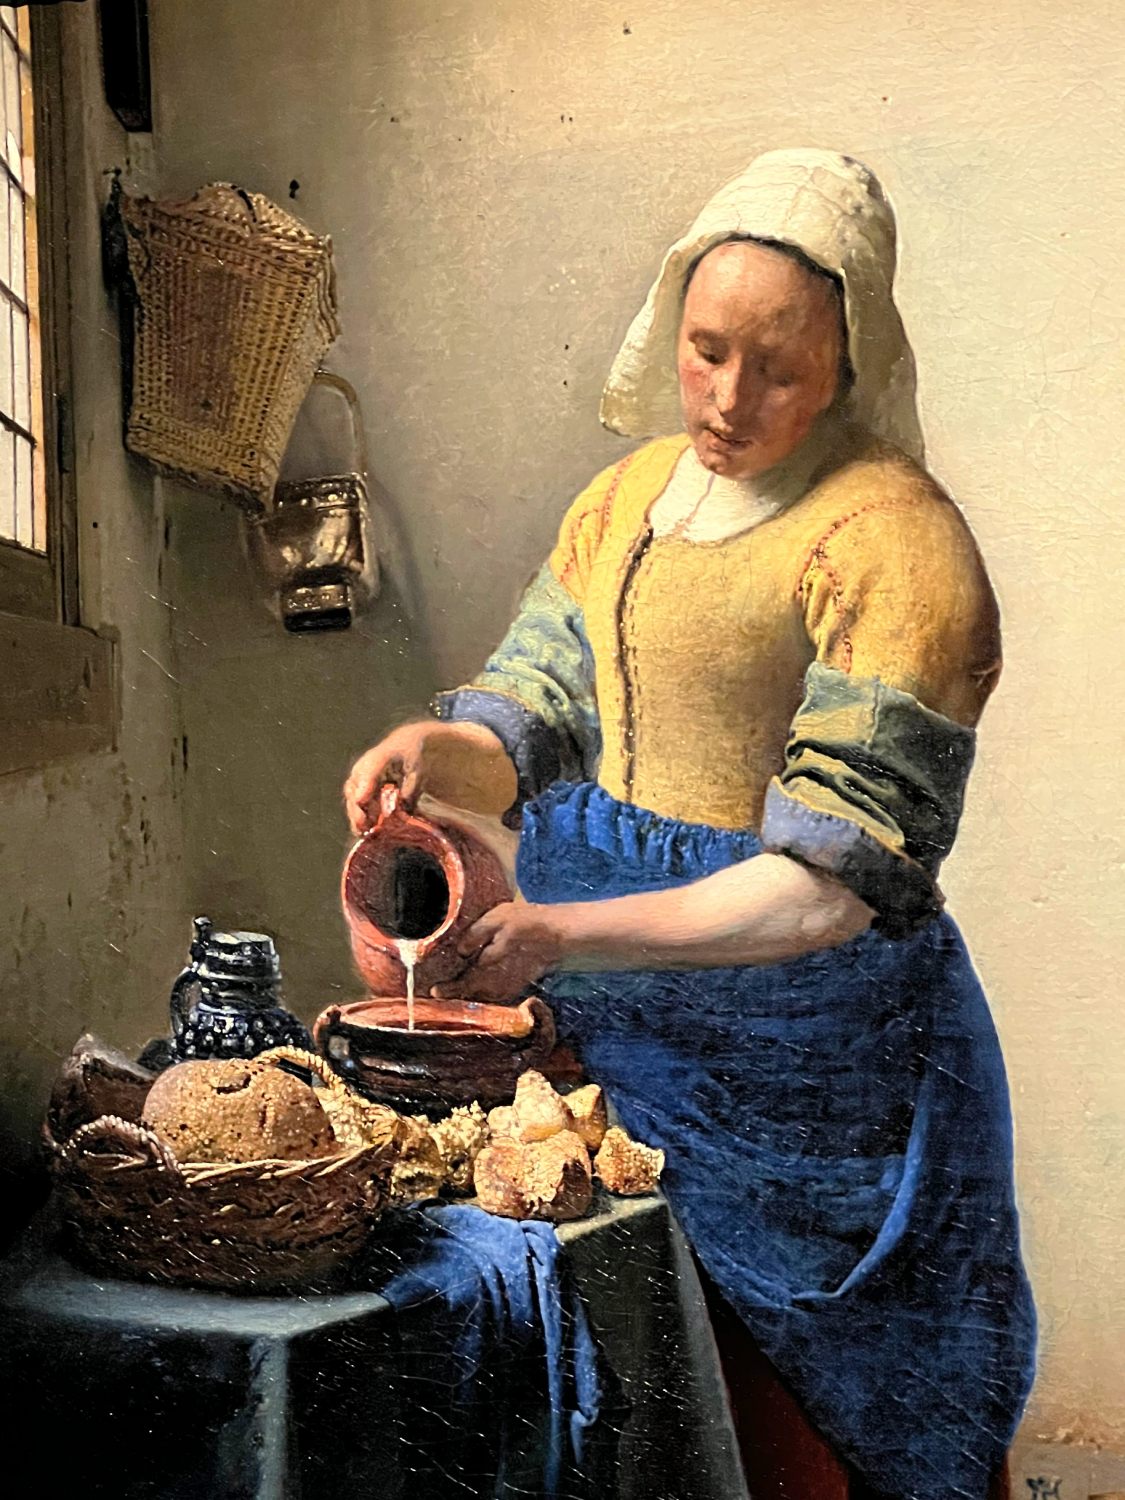 Vermeer's The Milkmaid